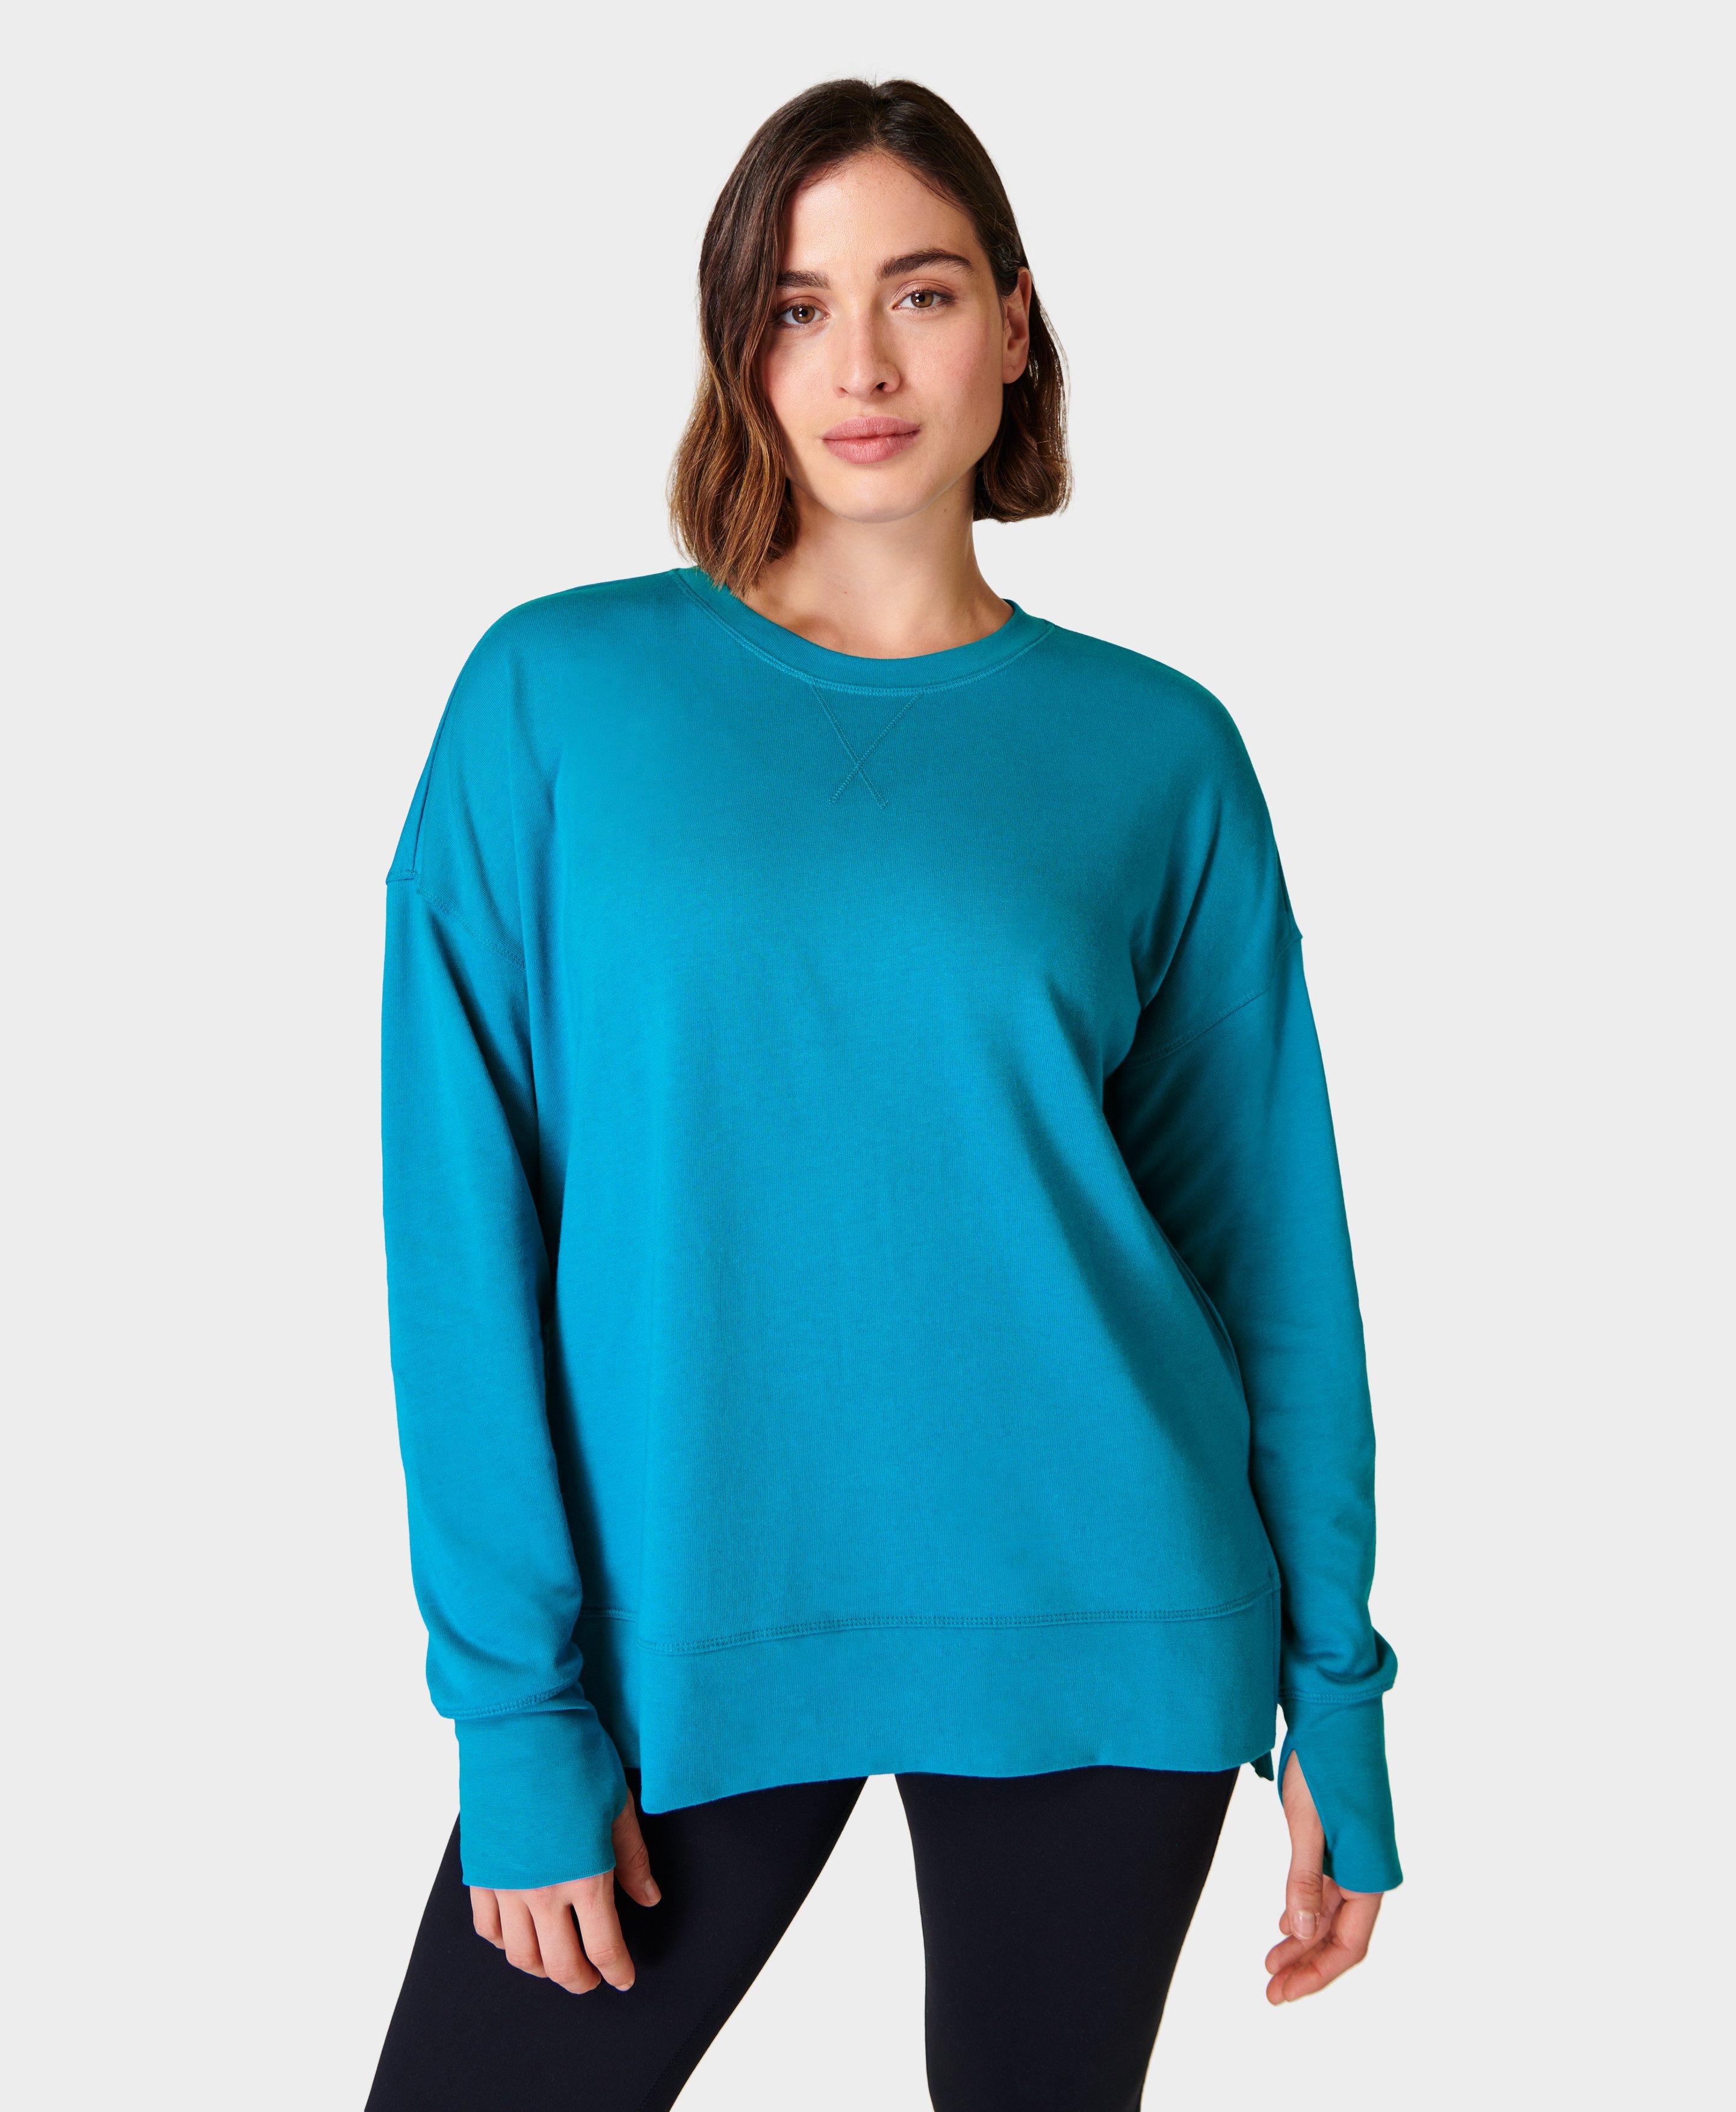 Women's Hoodies & Sweatshirts | Gym Tops | Sweaty Betty